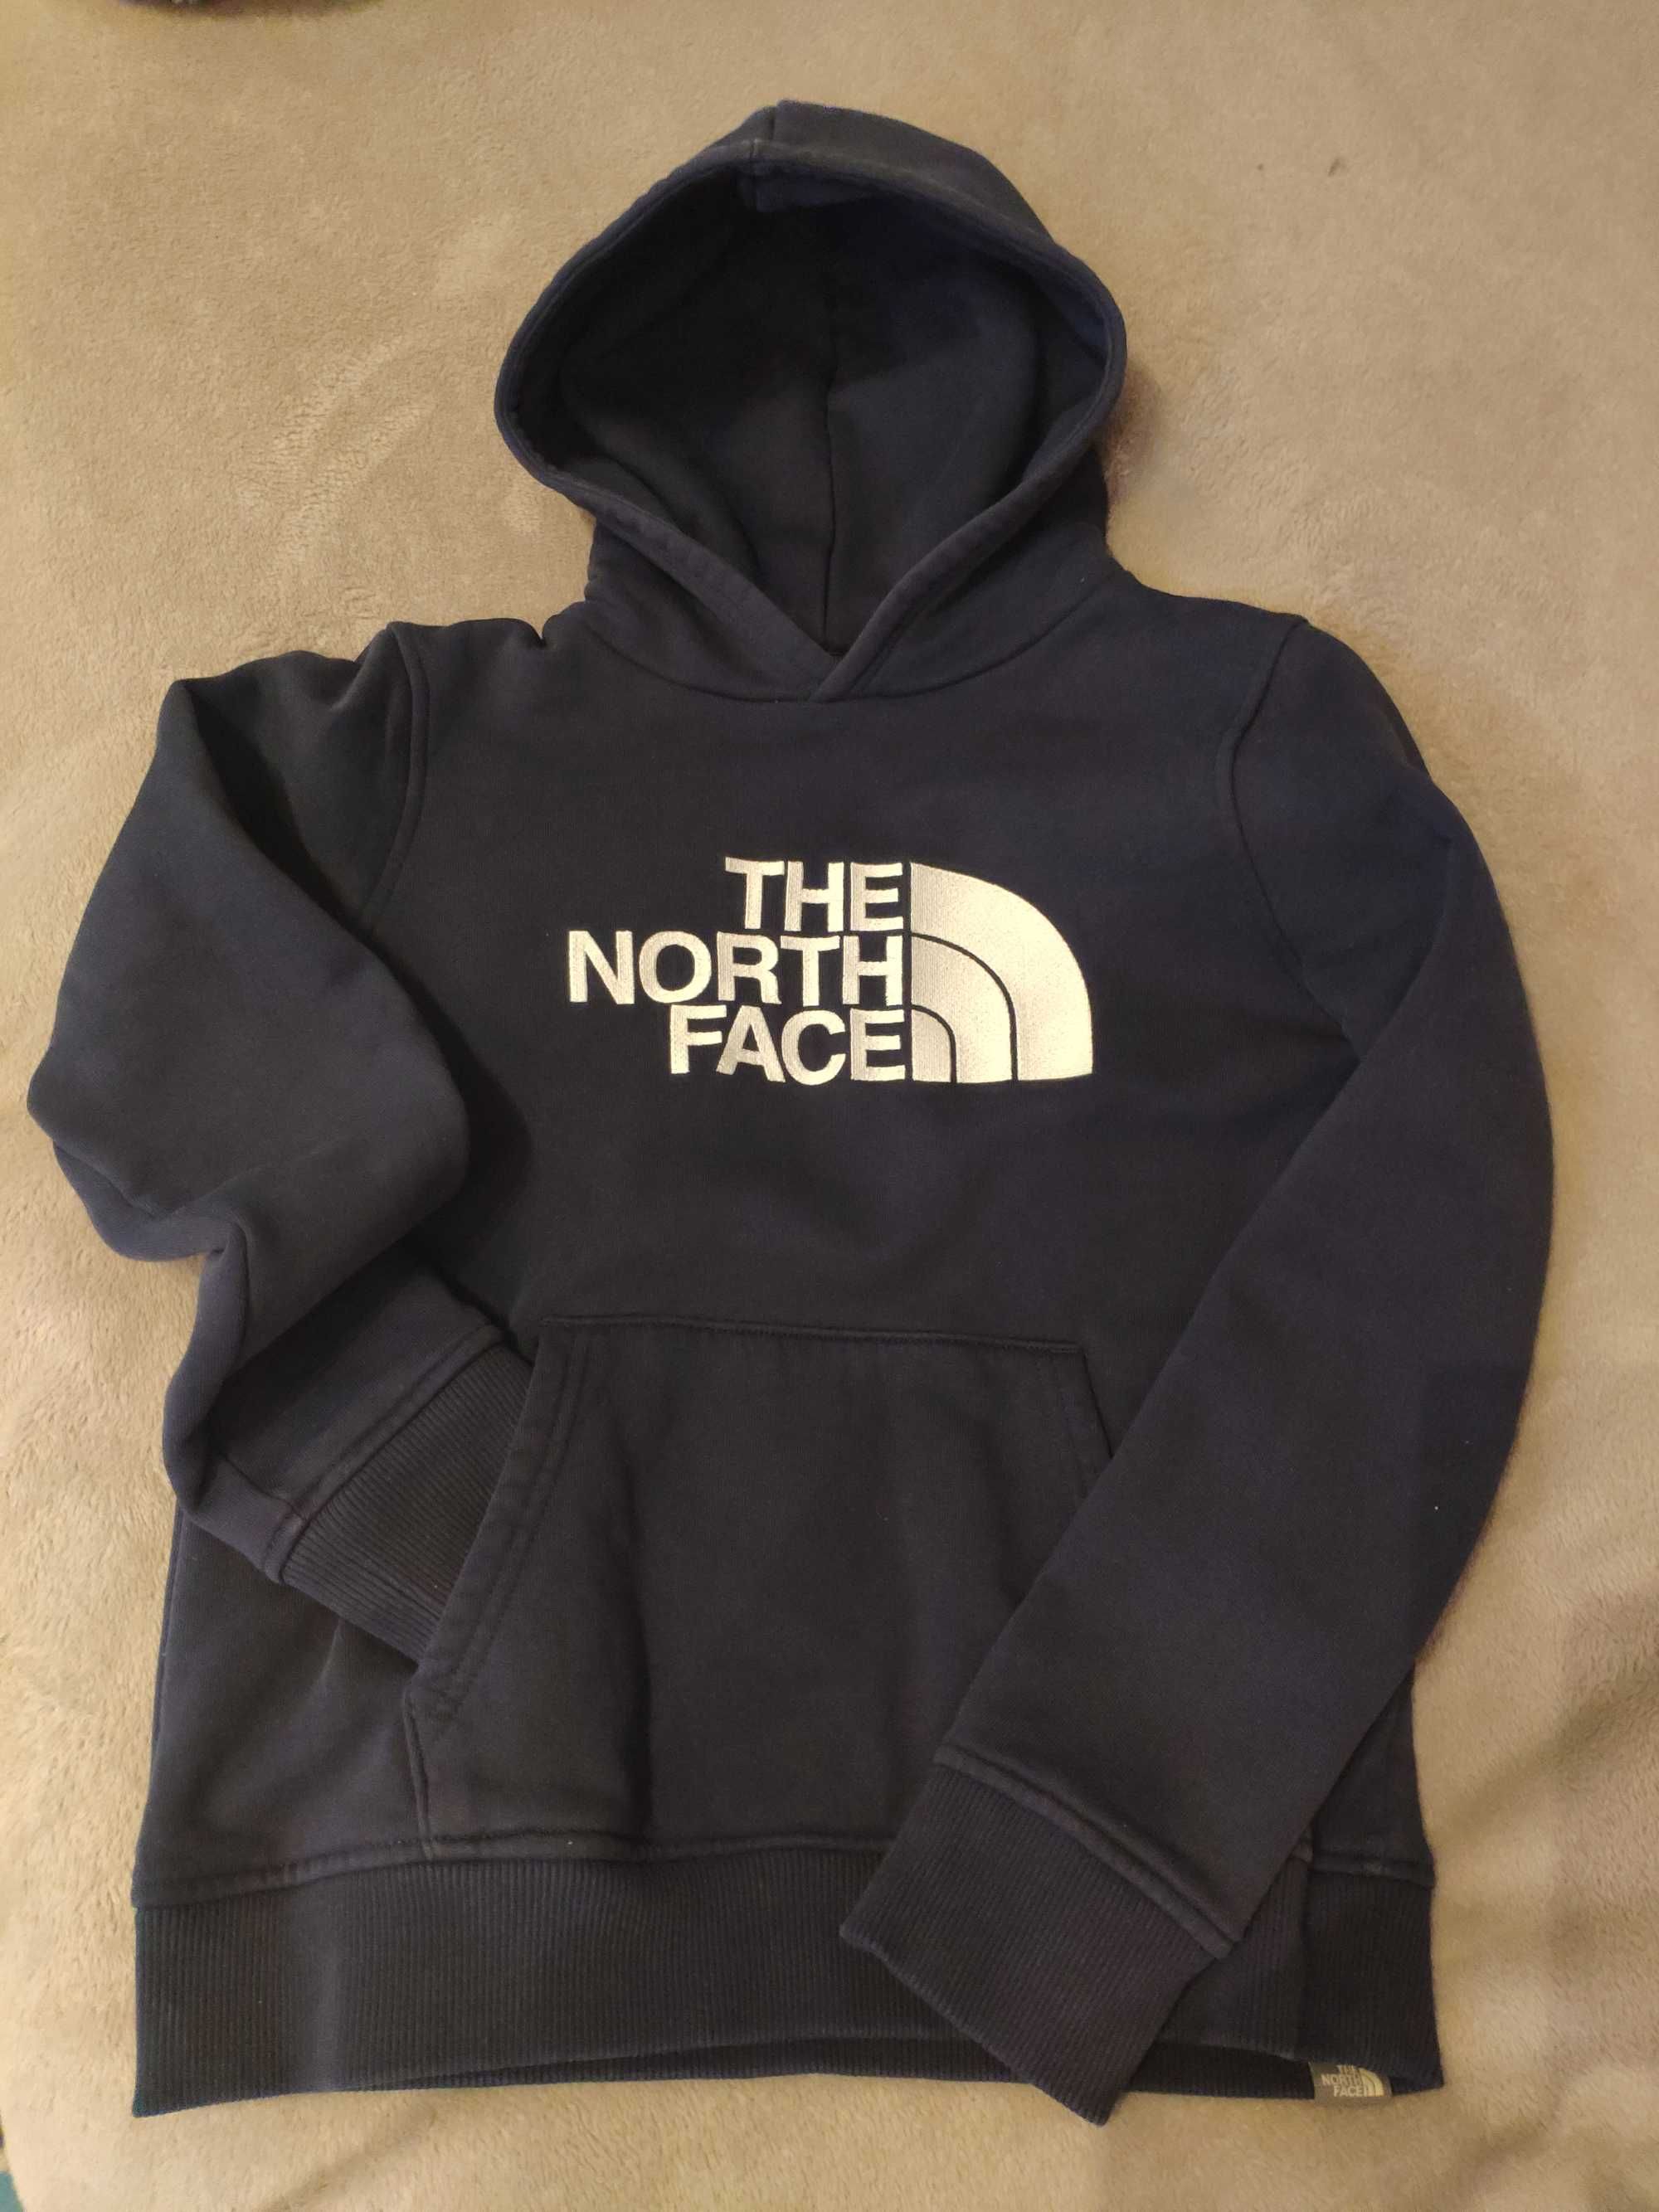 The North Face granatowa bluza z kapturem rozmiar L/G ok. 146 cm